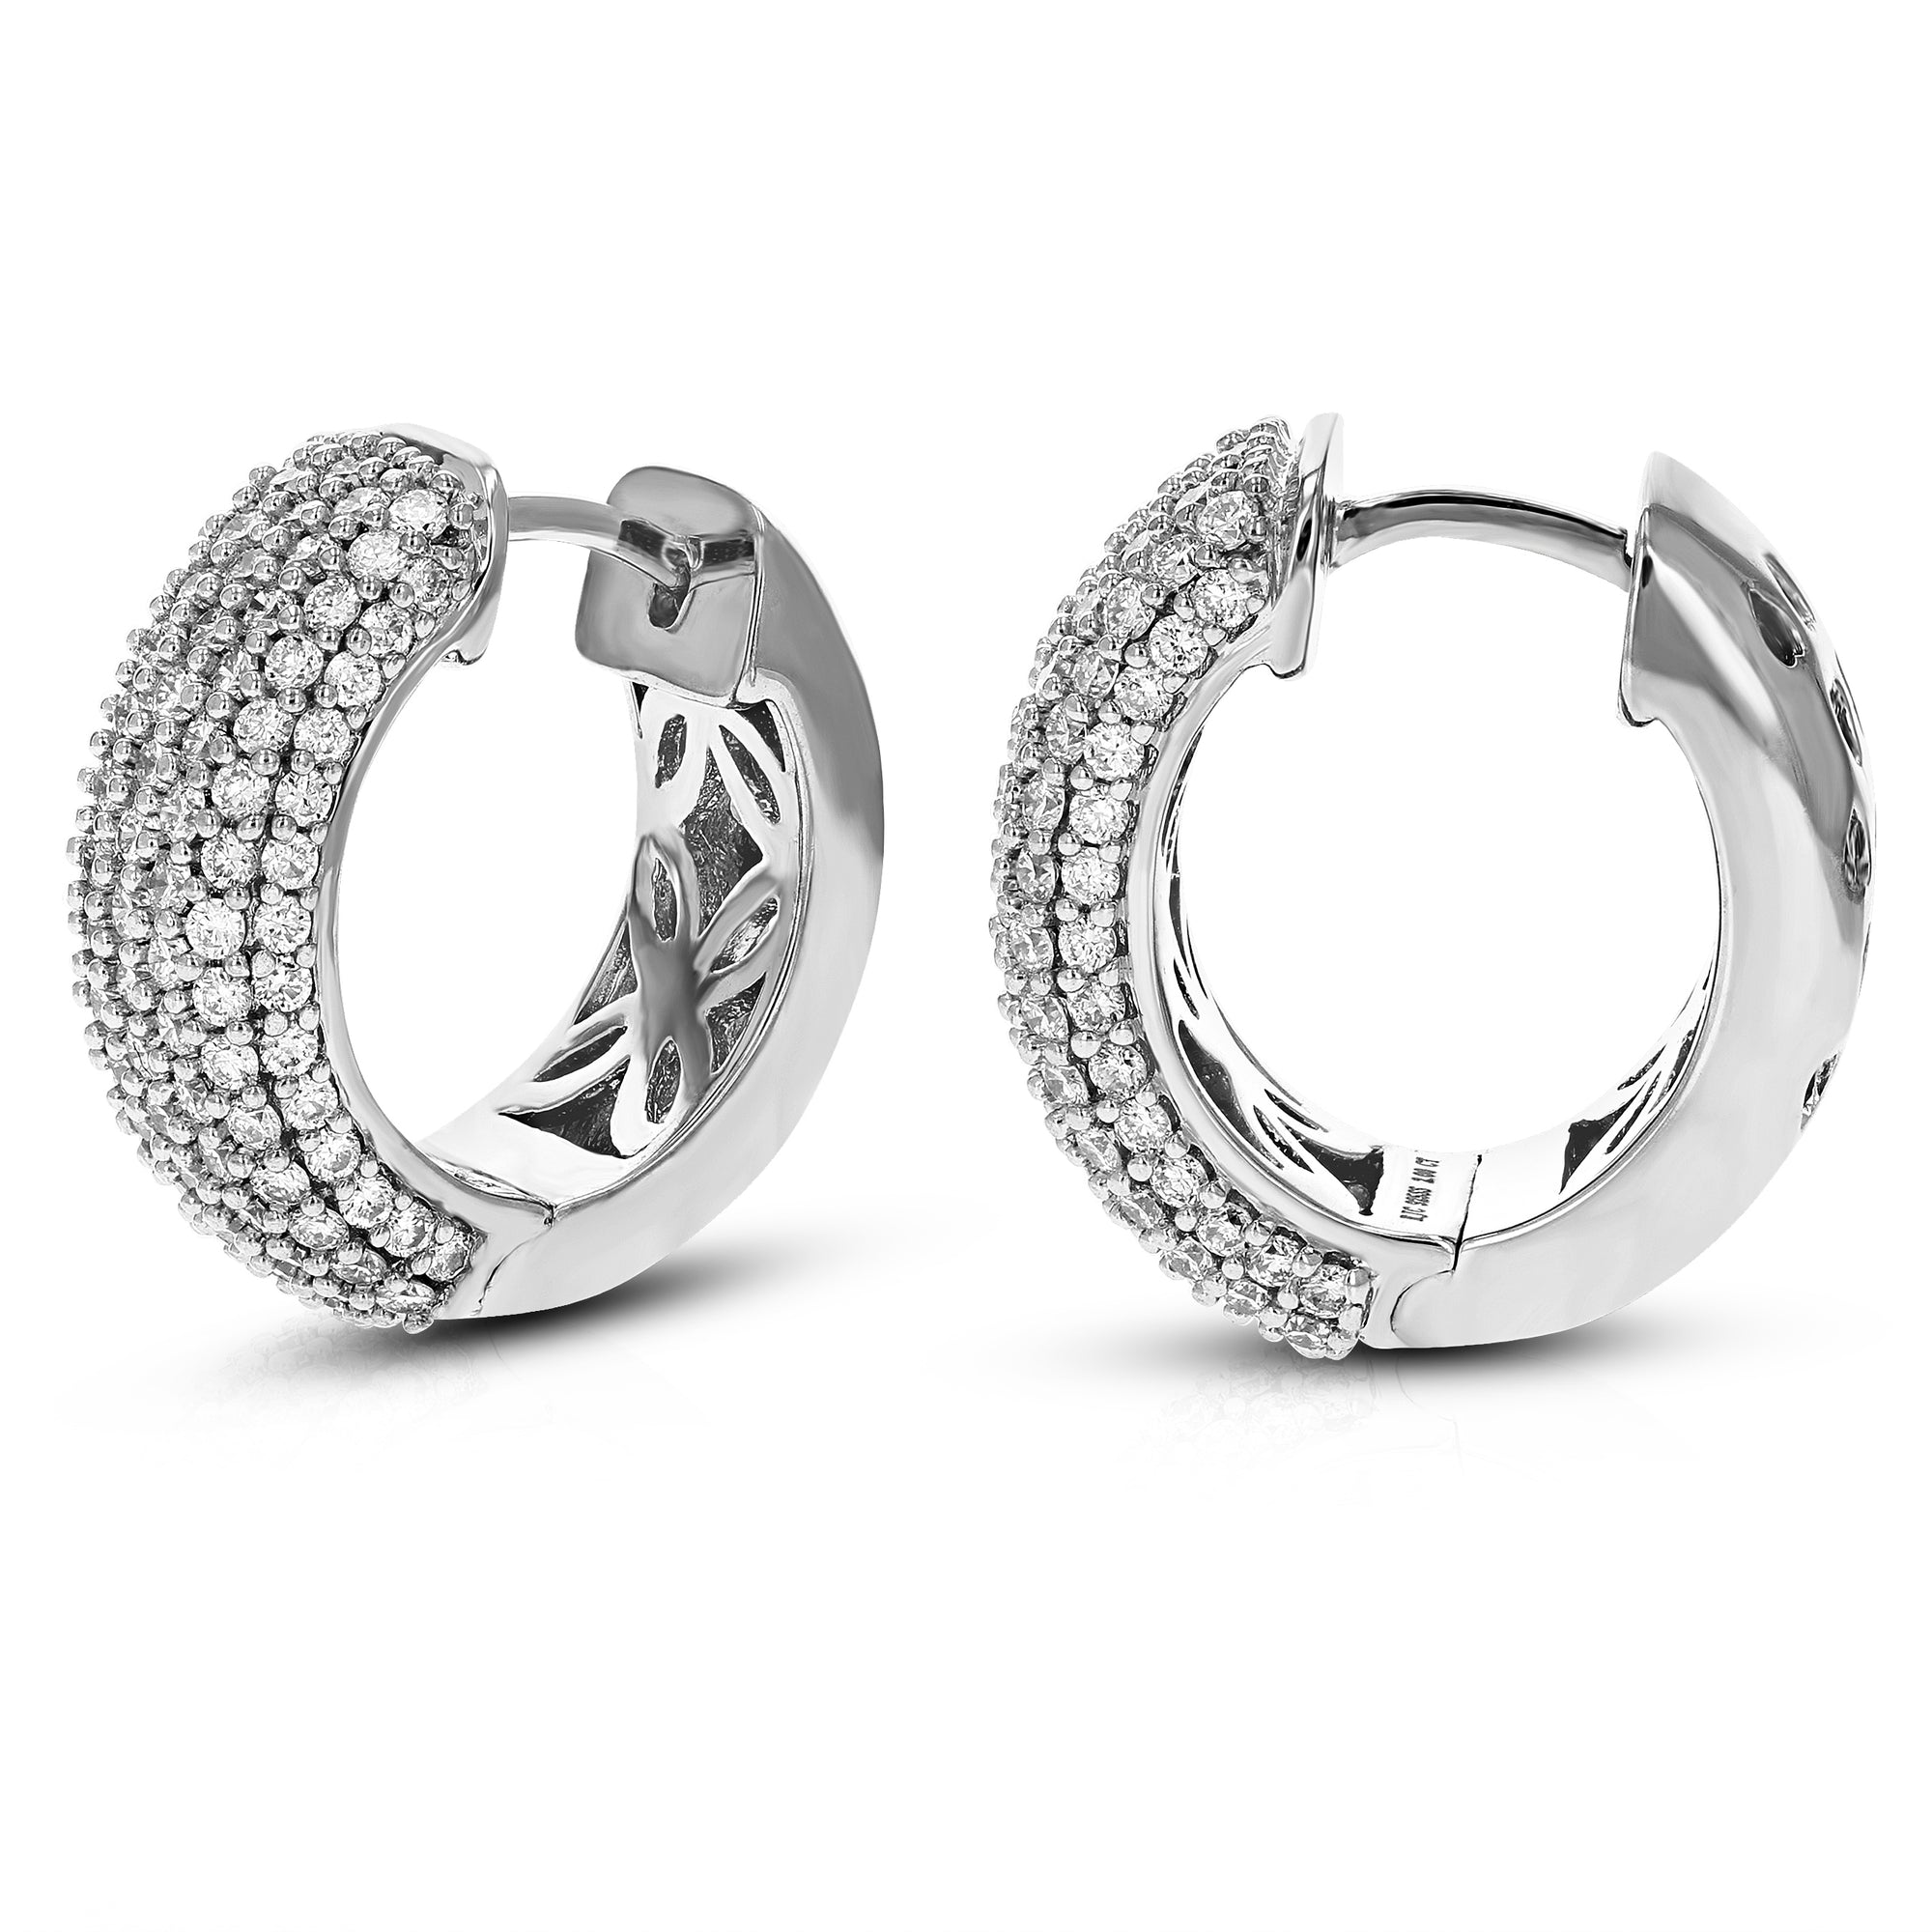 2 cttw Diamond Hoop Earrings for Women, Round Lab Grown Diamond Earrings in .925 Sterling Silver, Prong Setting, 3/4 Inch